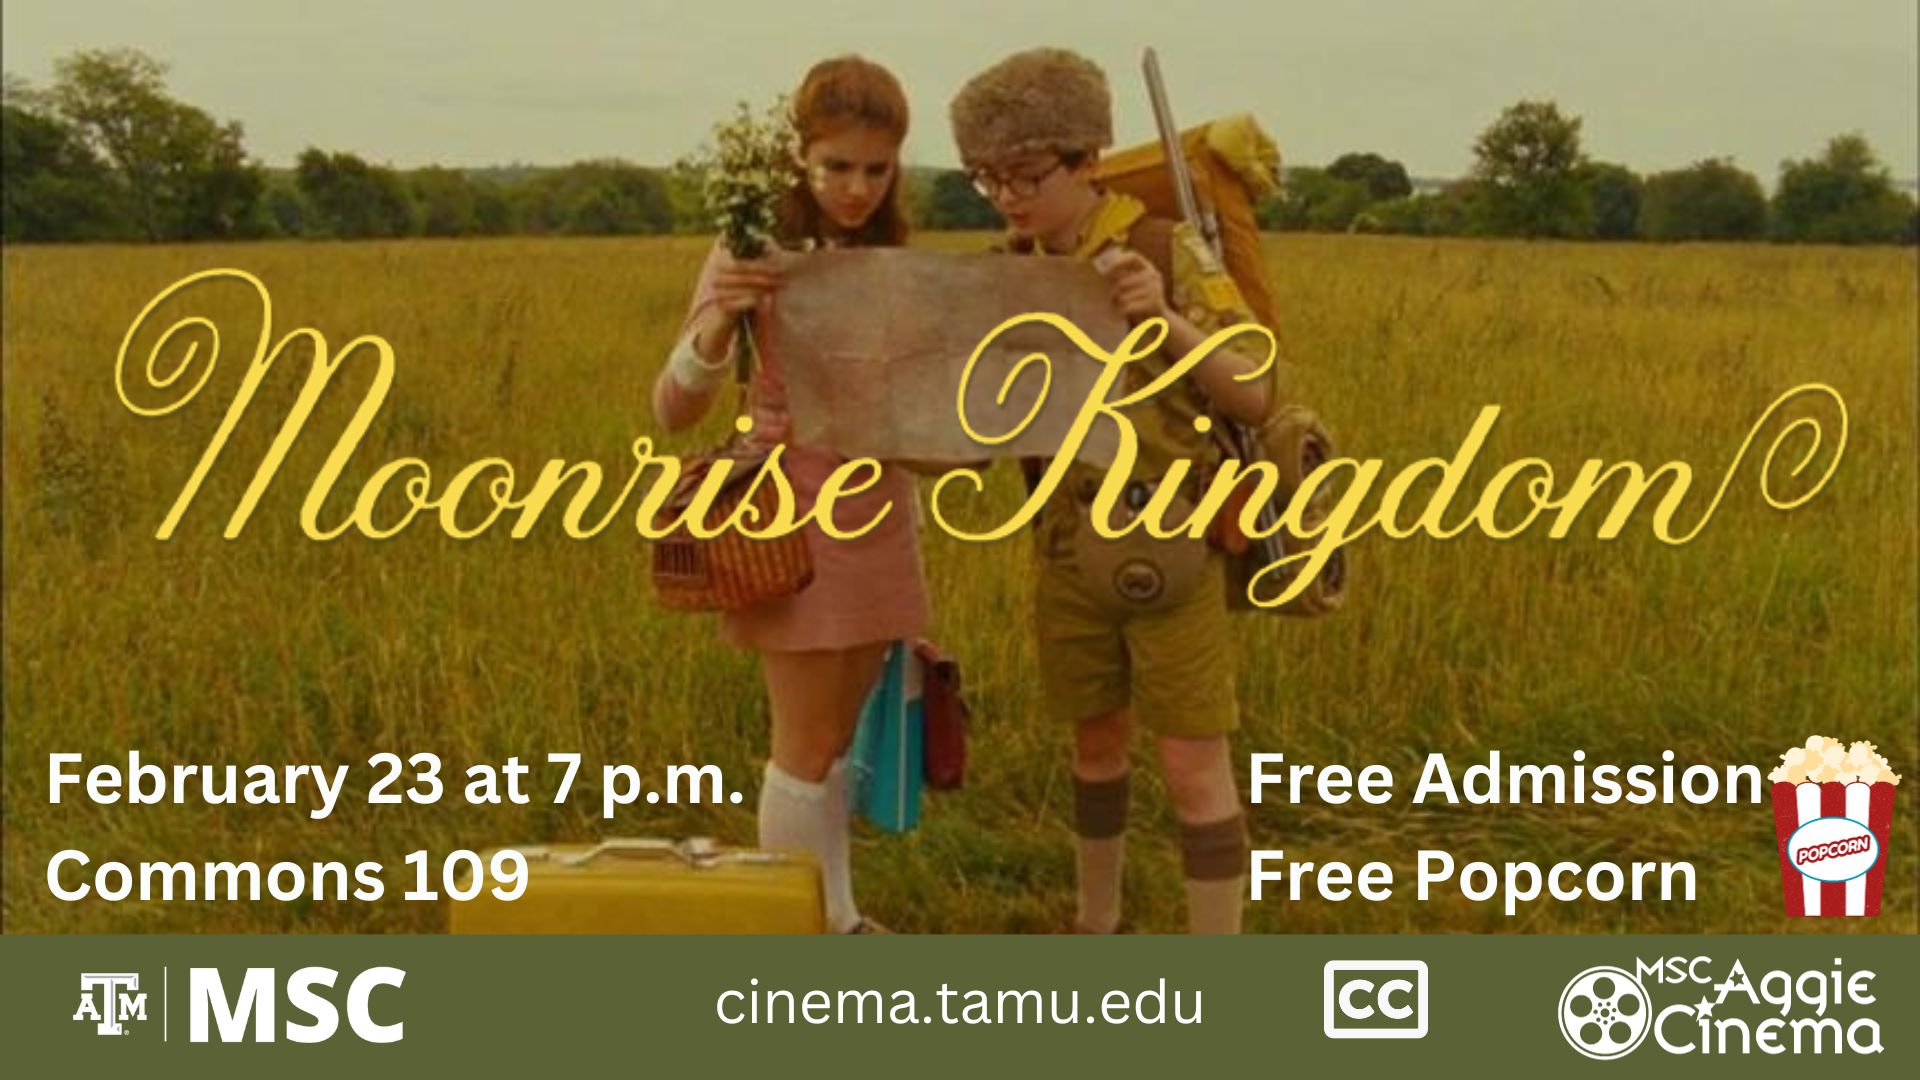 MSC Aggie Cinema presents Moonrise Kingdom, February 23 at 7 p.m. at Commons 109, Free Admission, Free Popcorn website: cinema.tamu.edu